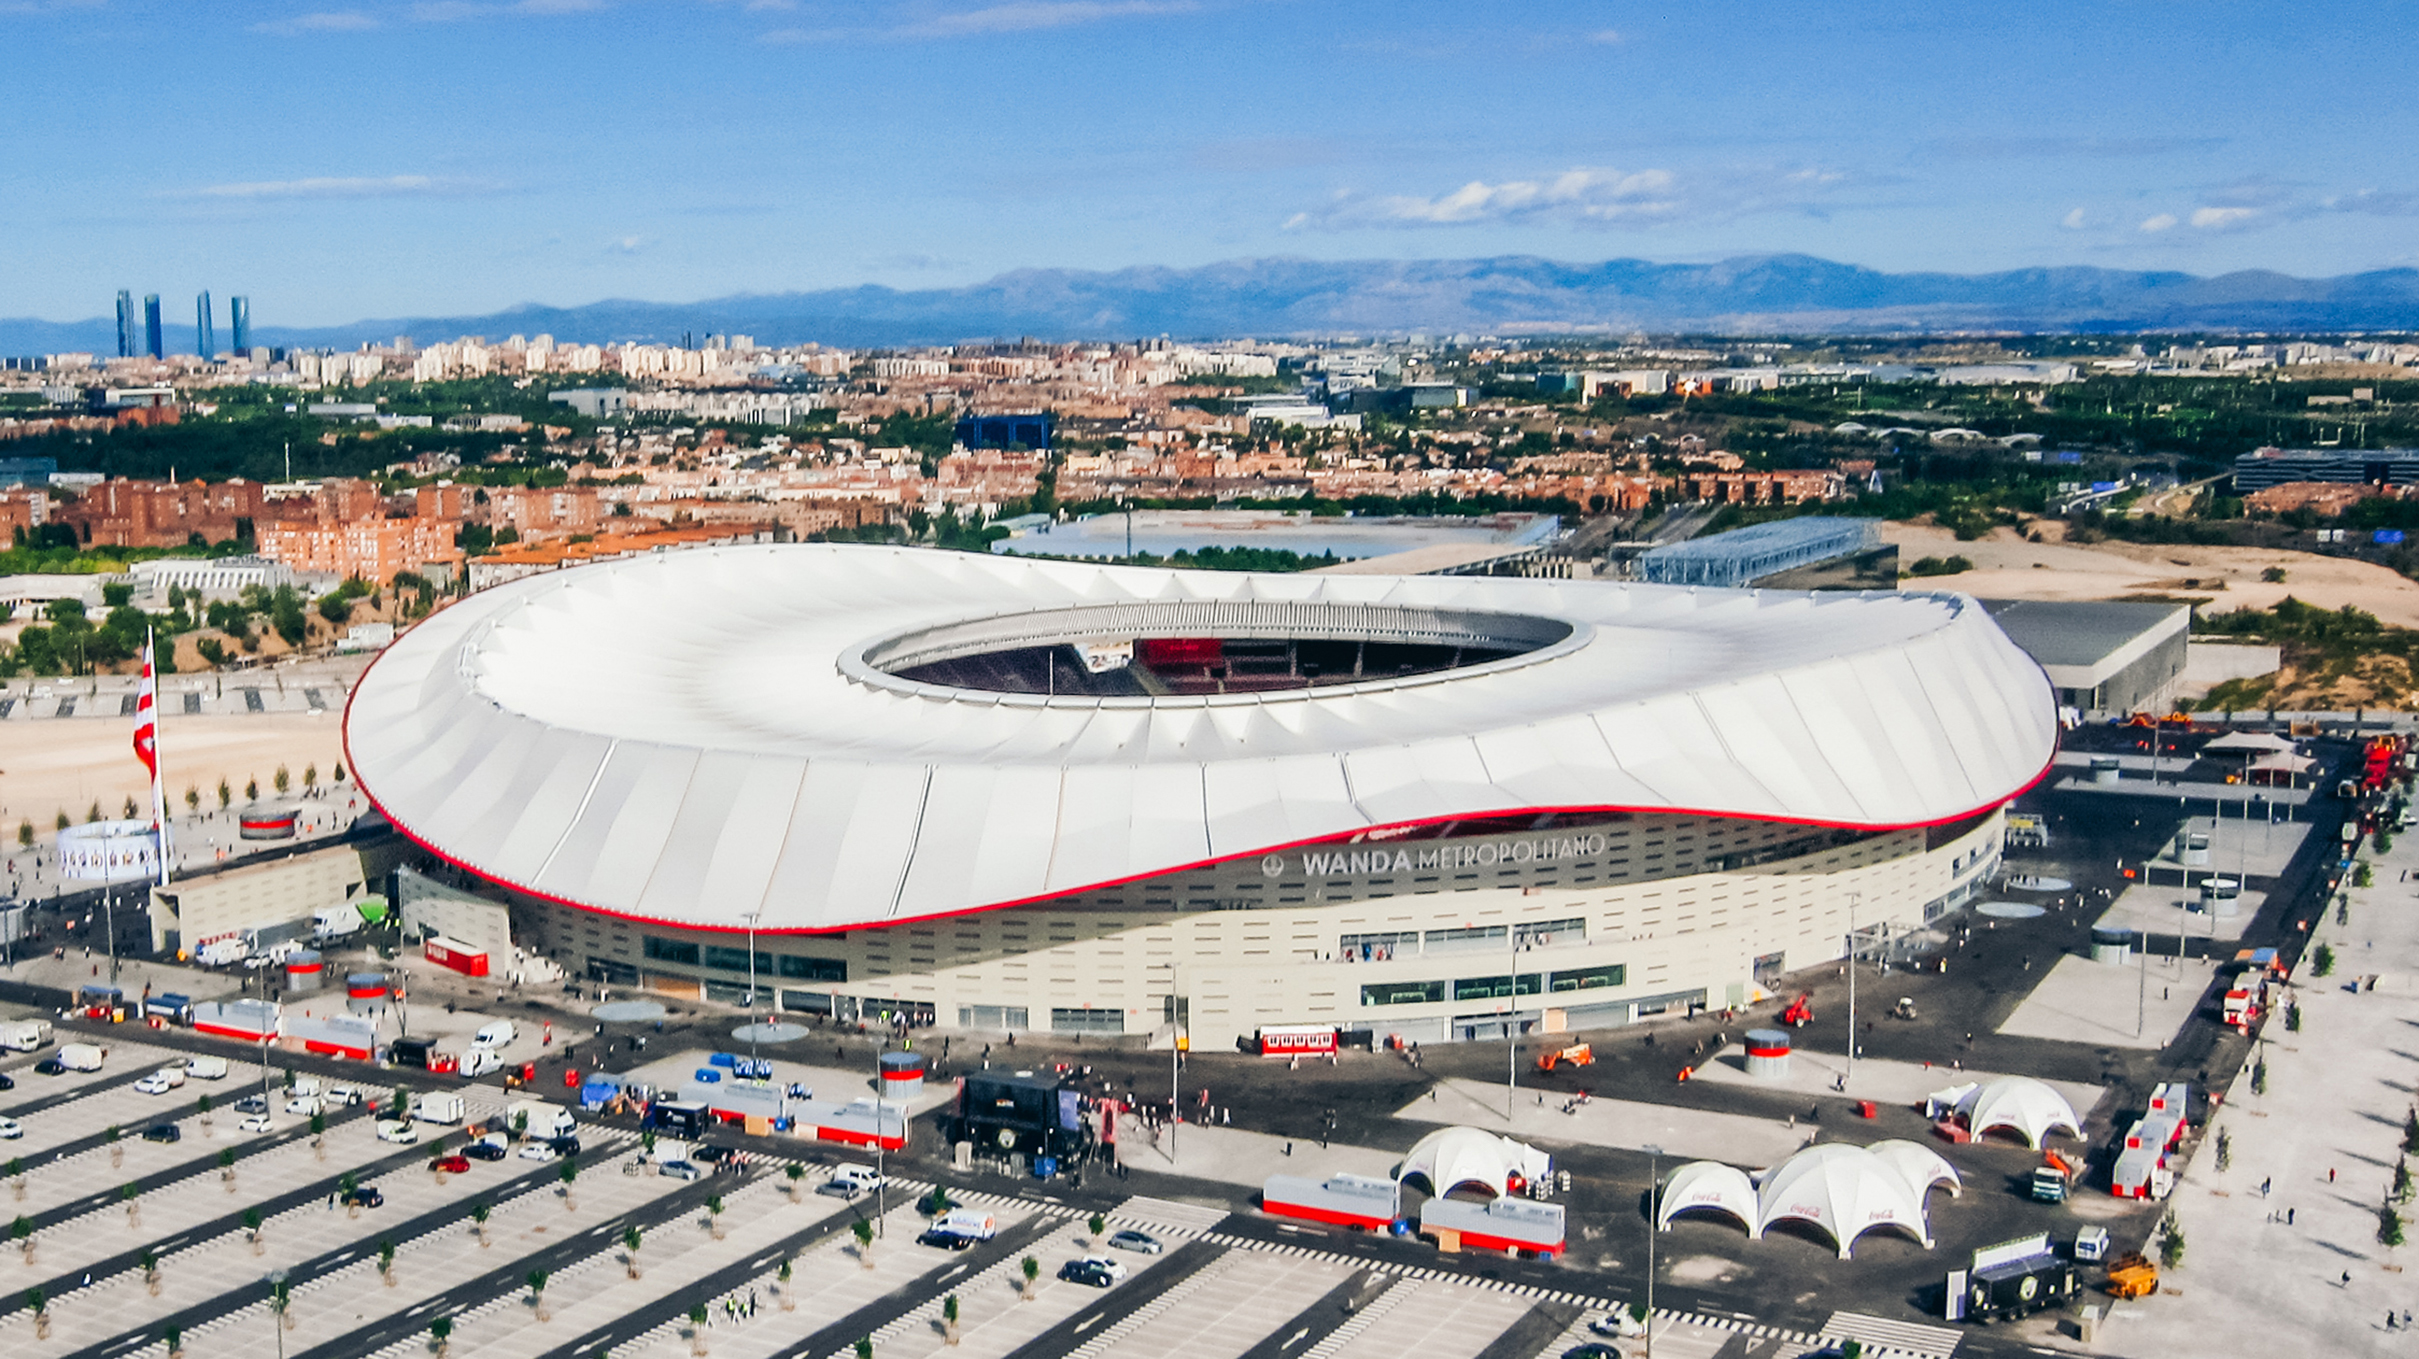 Stade Velodrome Marseille, MakMax Group (Taiyo Kogyo)